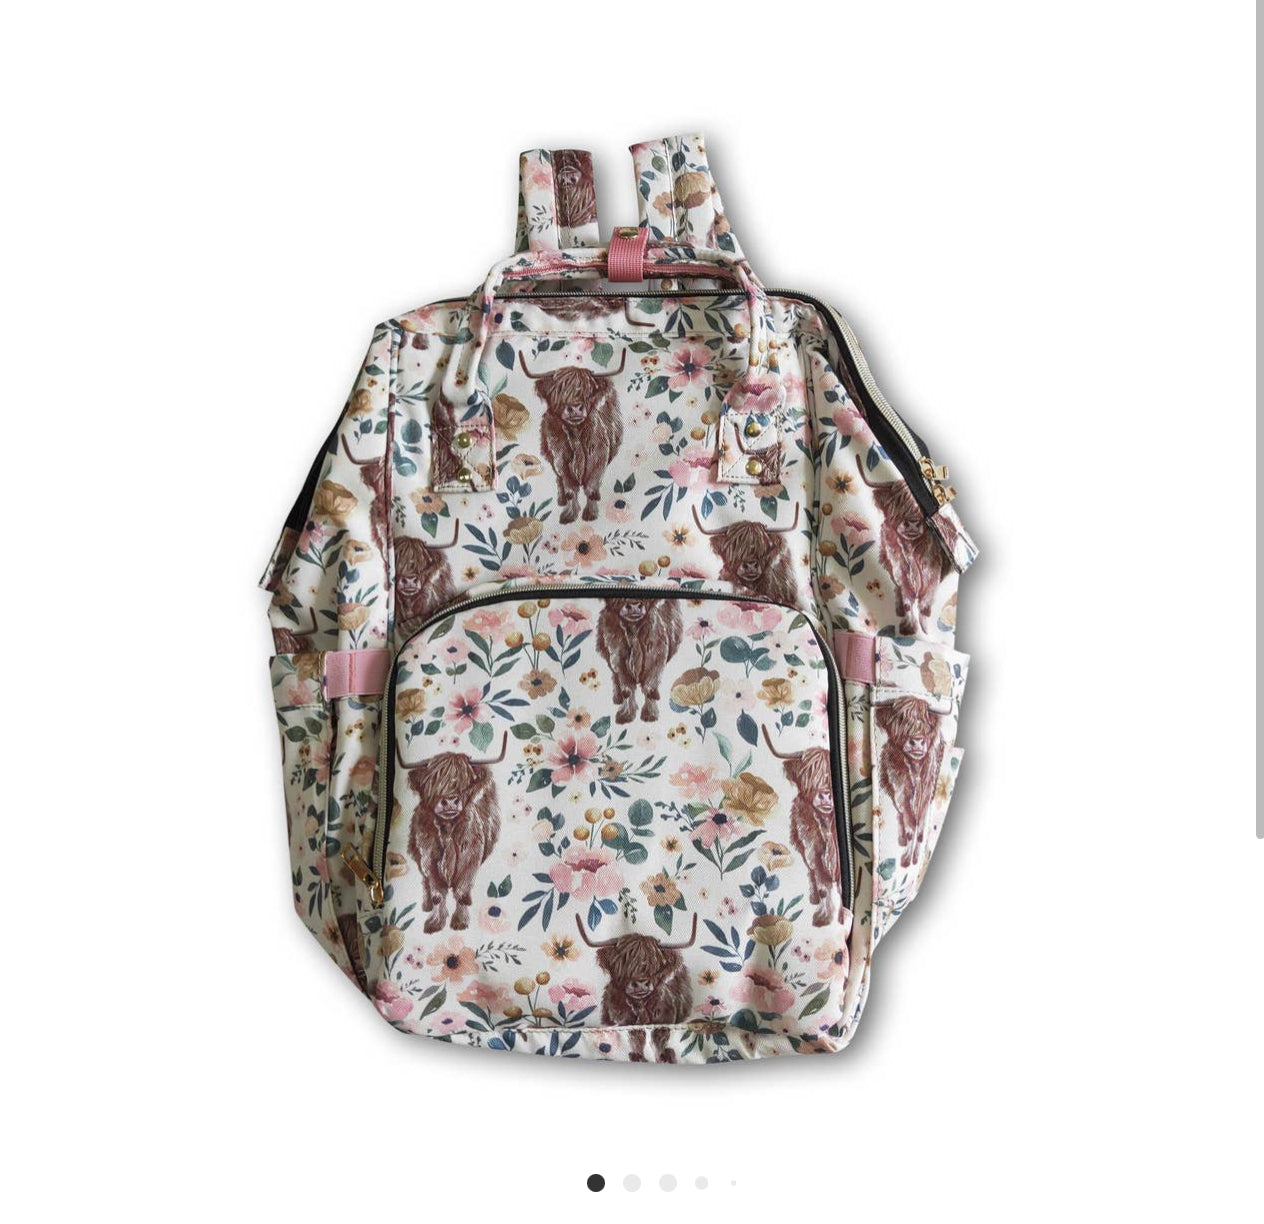 Highland Cow Backpack/Diaper Bag